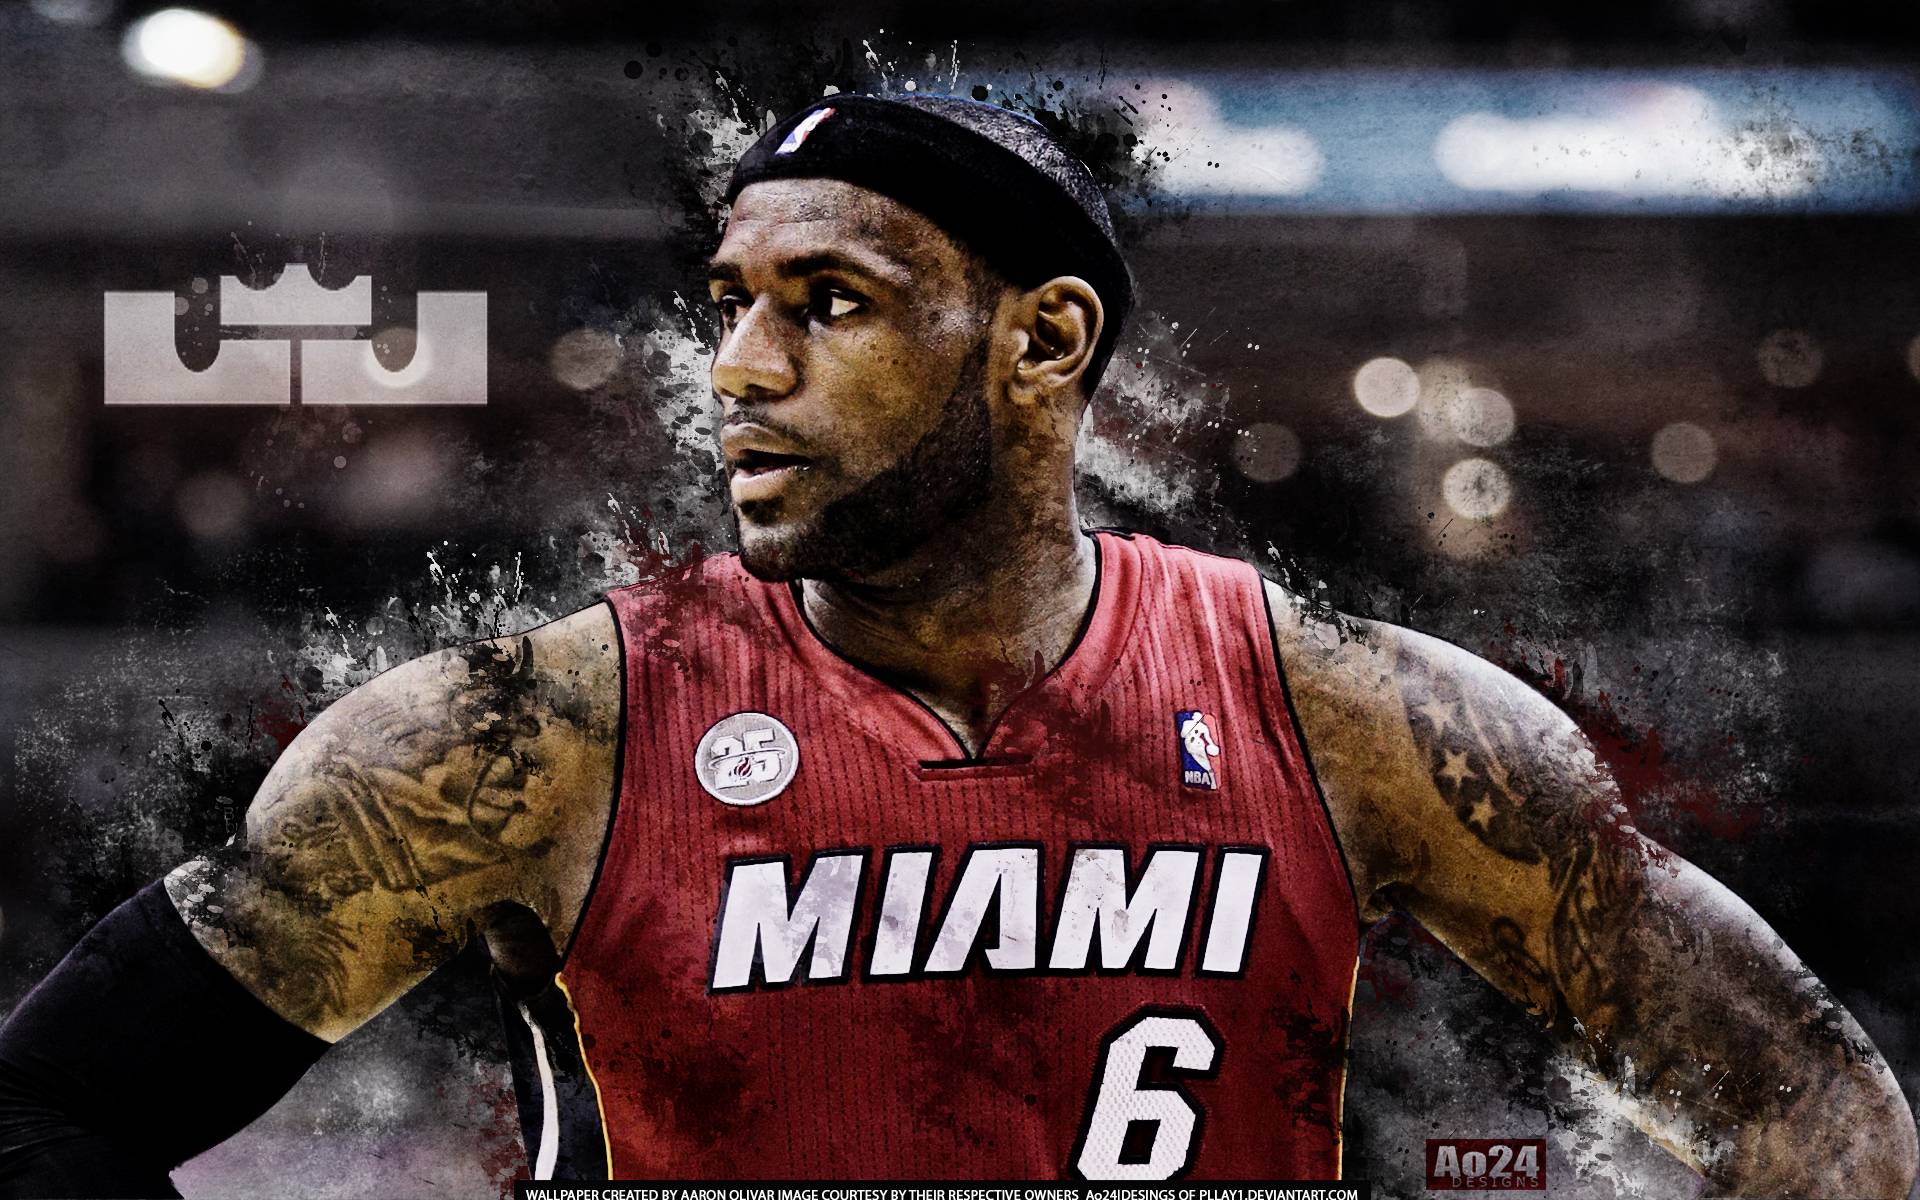 Miami Heat LeBron James Wallpaper. Hdwidescreens